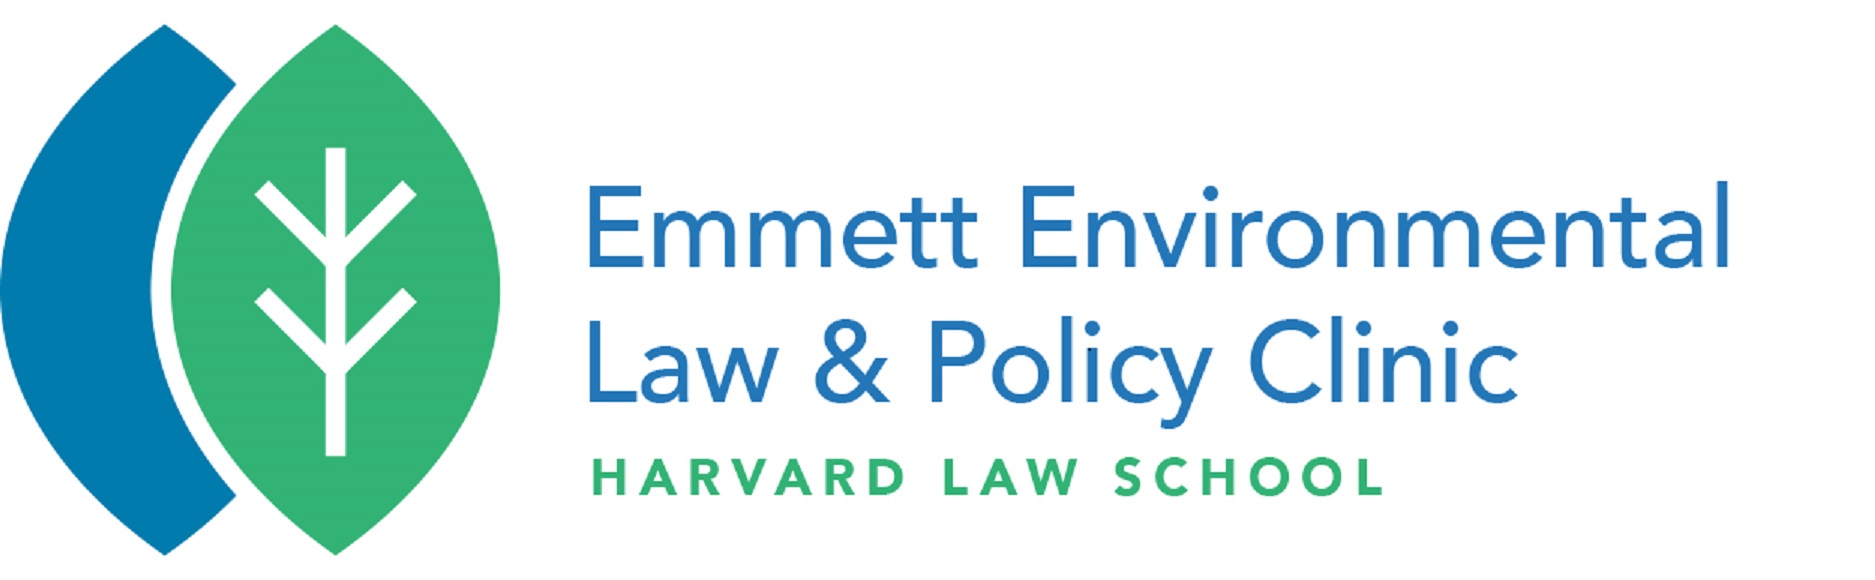 Emmett Environmental Law & Policy Clinic logo